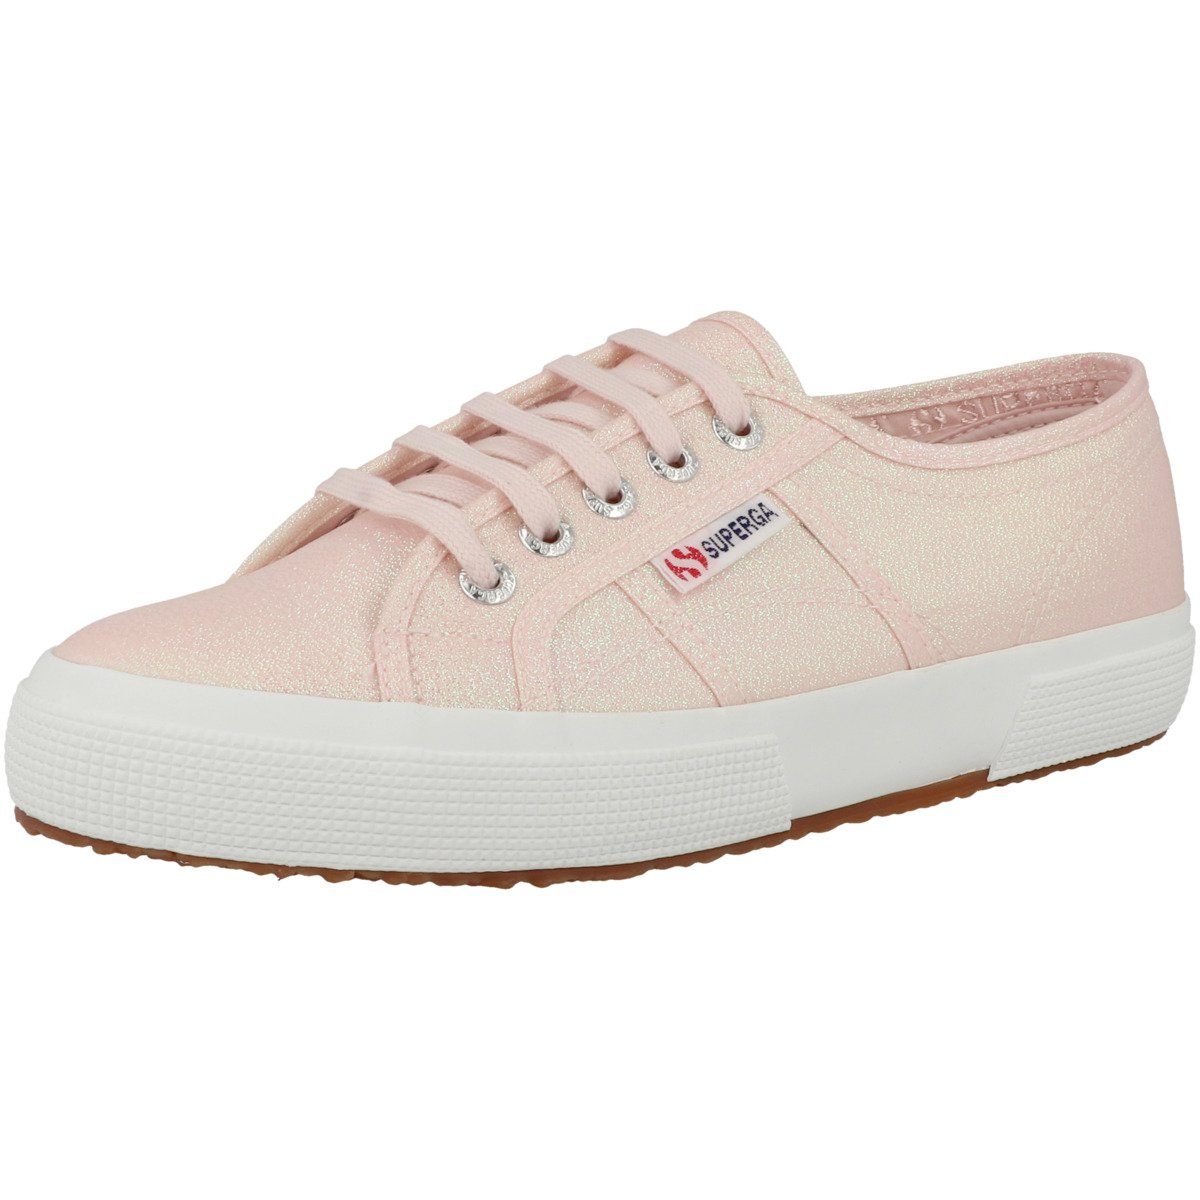 Lamew Superga Damen rosa Sneaker 2750